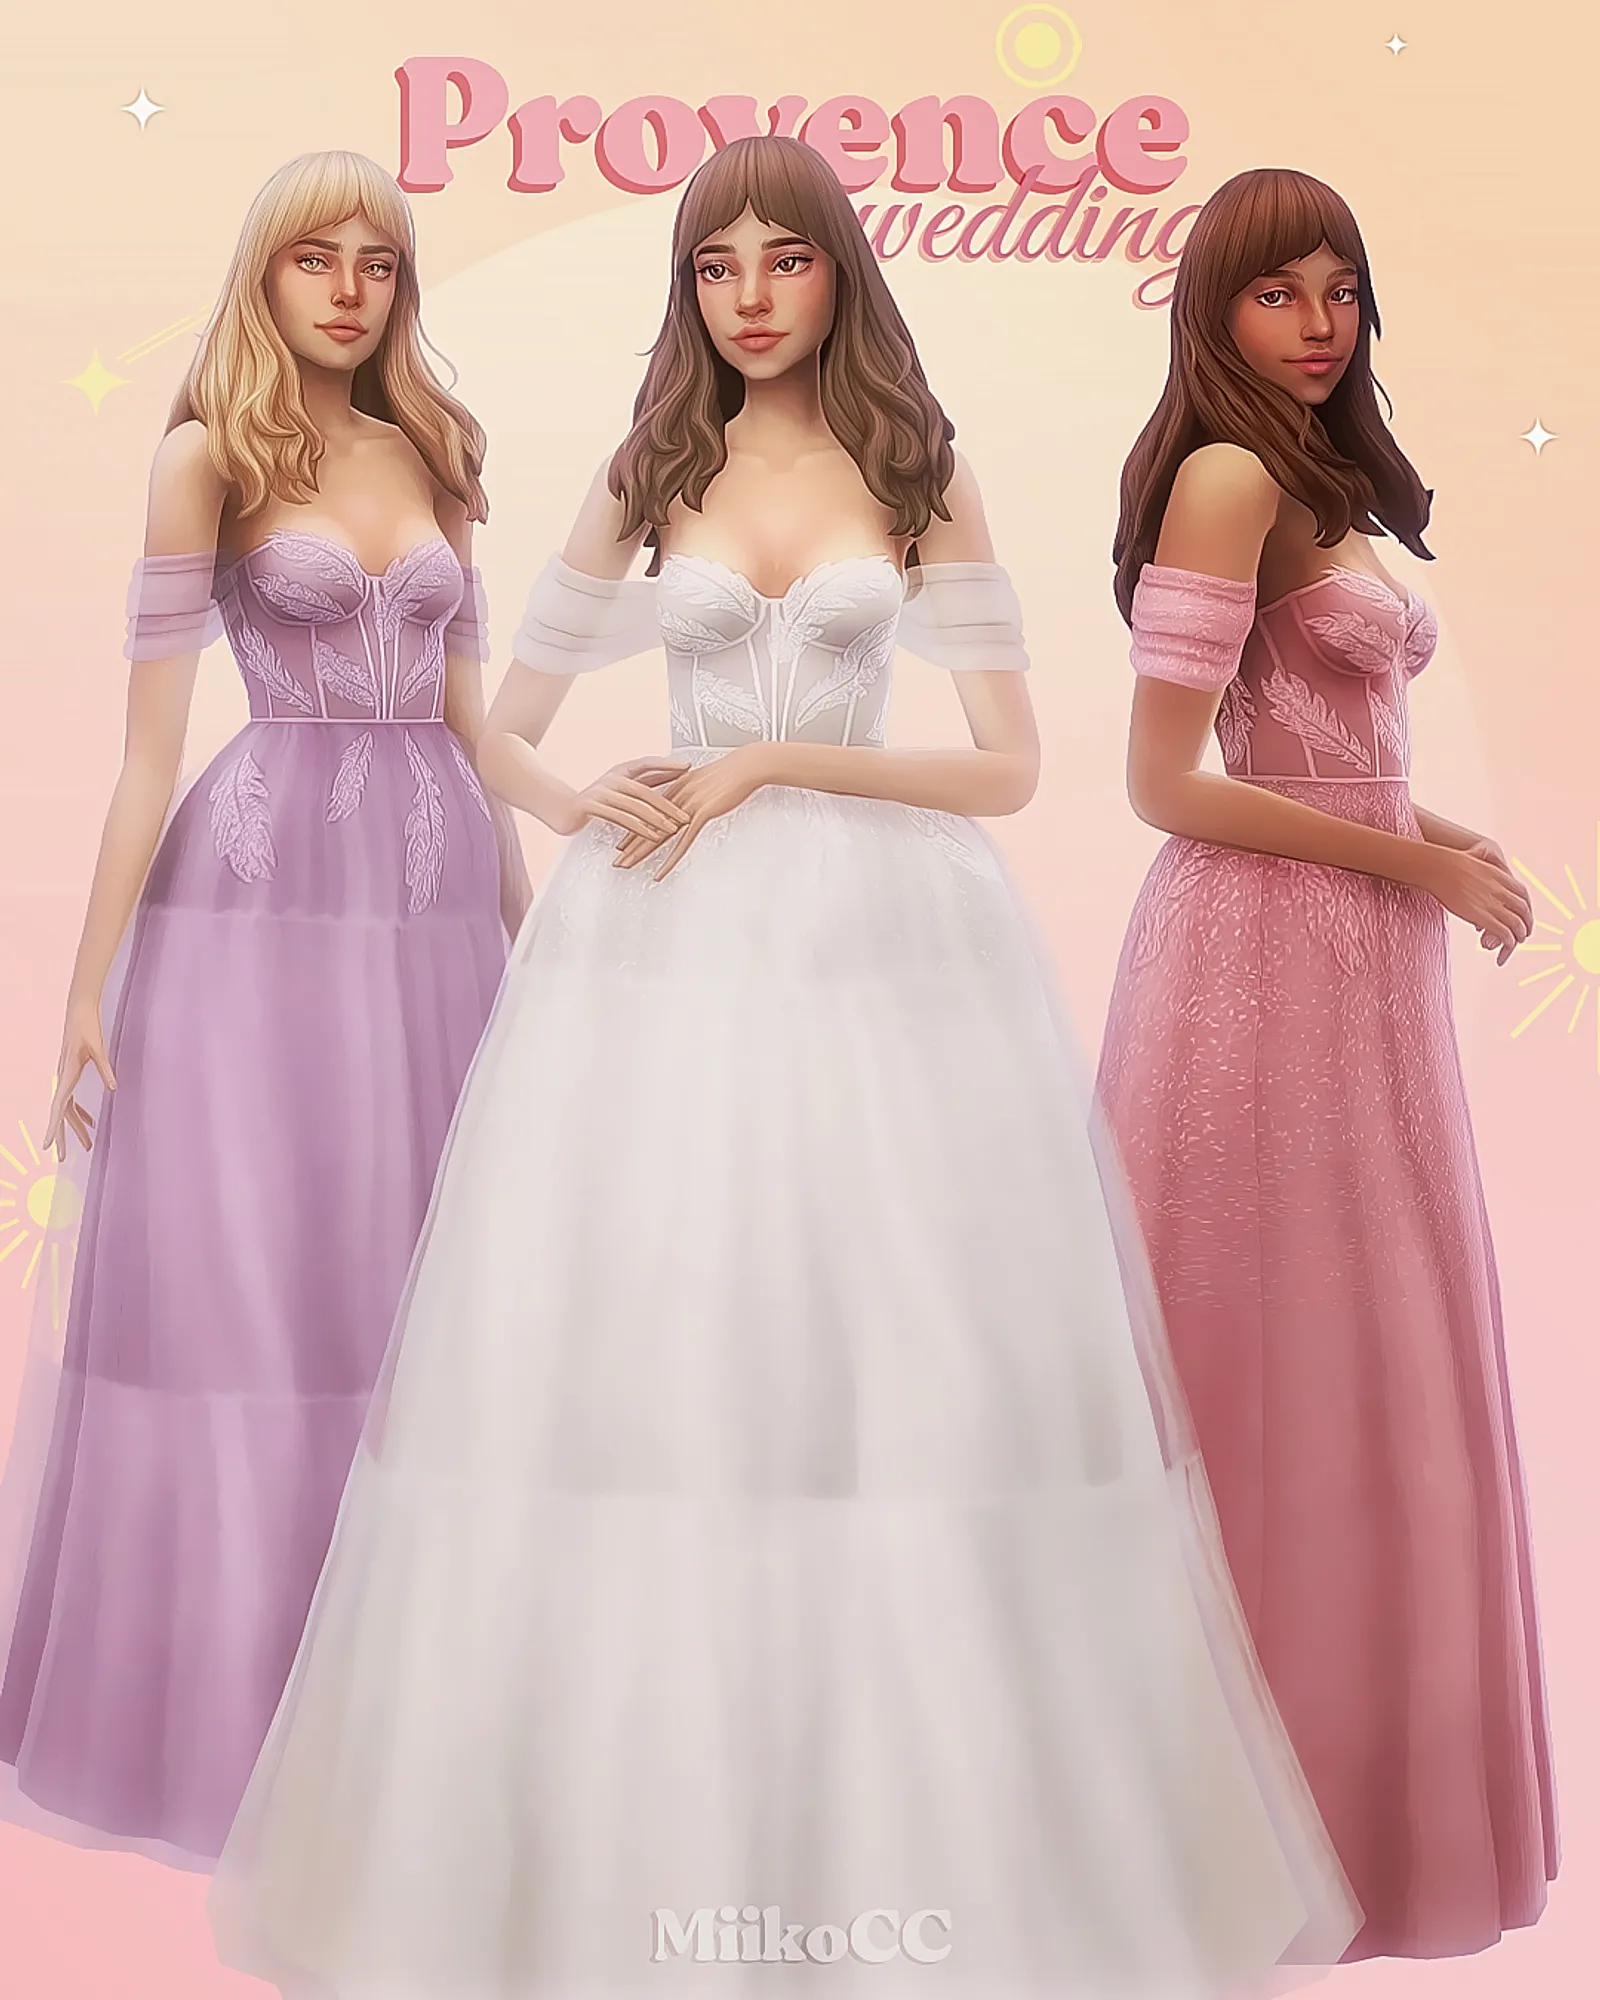 Provence wedding set ~ dresses & hairstyle